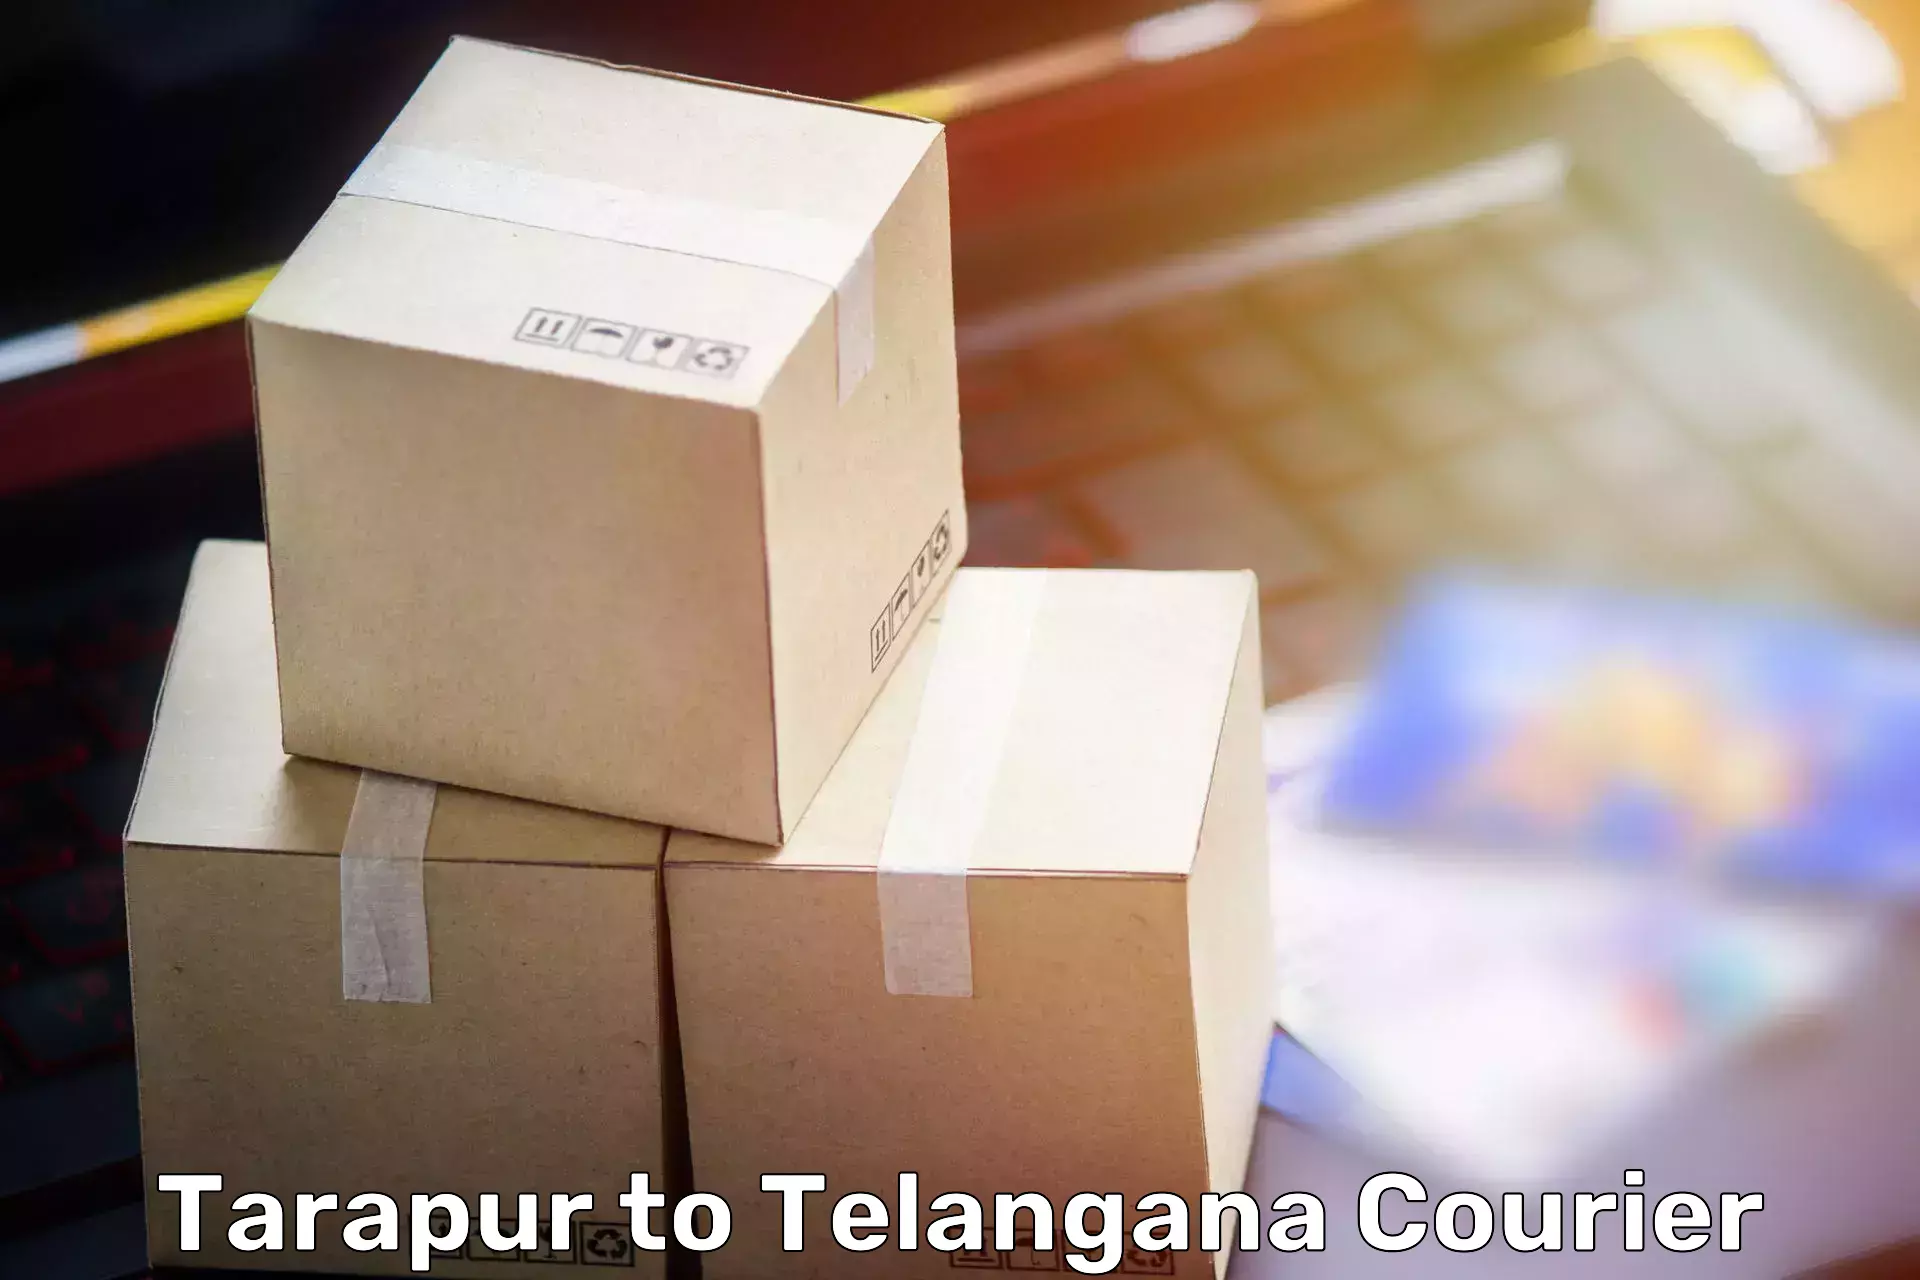 Furniture transport professionals Tarapur to Sangareddy